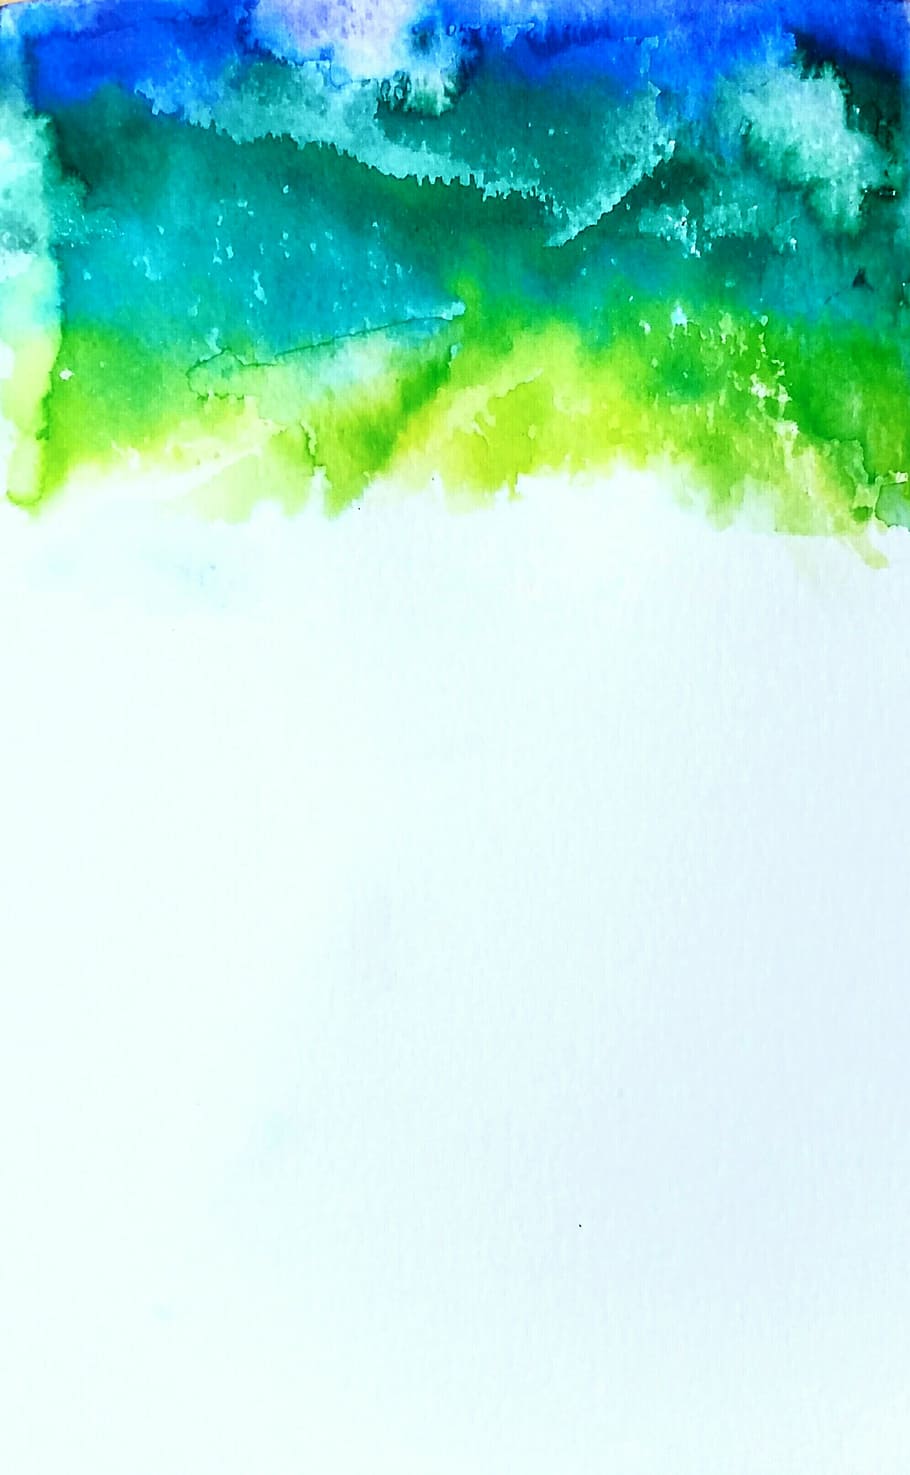 hijau, biru, teal, abstrak, lukisan, cat air, nila, tetes, splatter, tekstur